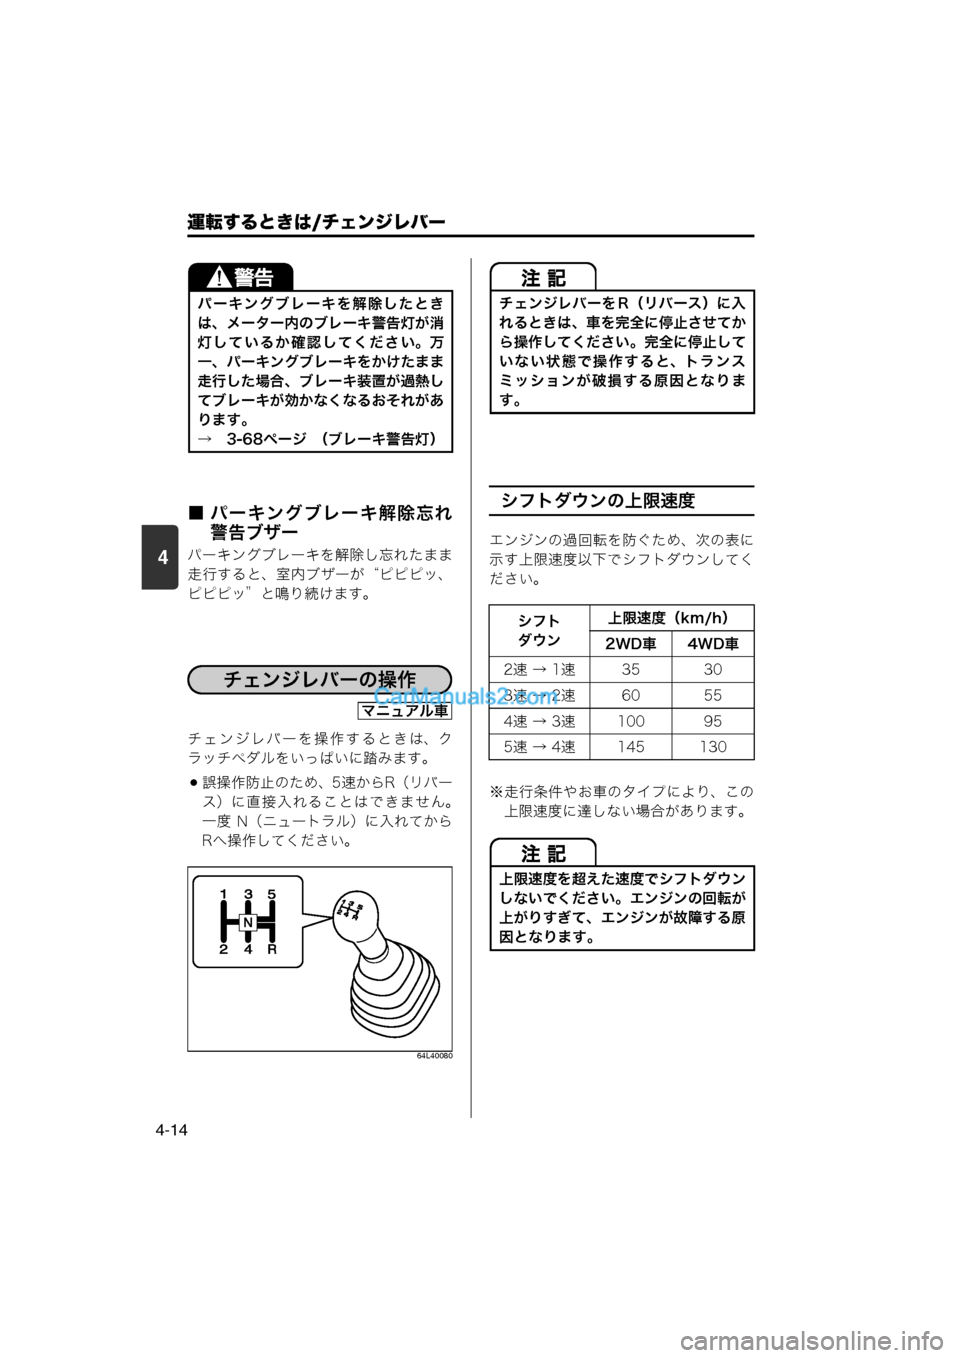 MAZDA MODEL CARROL 2013  取扱説明書 (キャロル) (in Japanese) 4
運転するときは/チェンジレバー
4-14
■ パーキングブレーキ解除忘れ警告ブザー
パーキングブレーキを解除し忘れたまま
走行すると、室内ブザー�